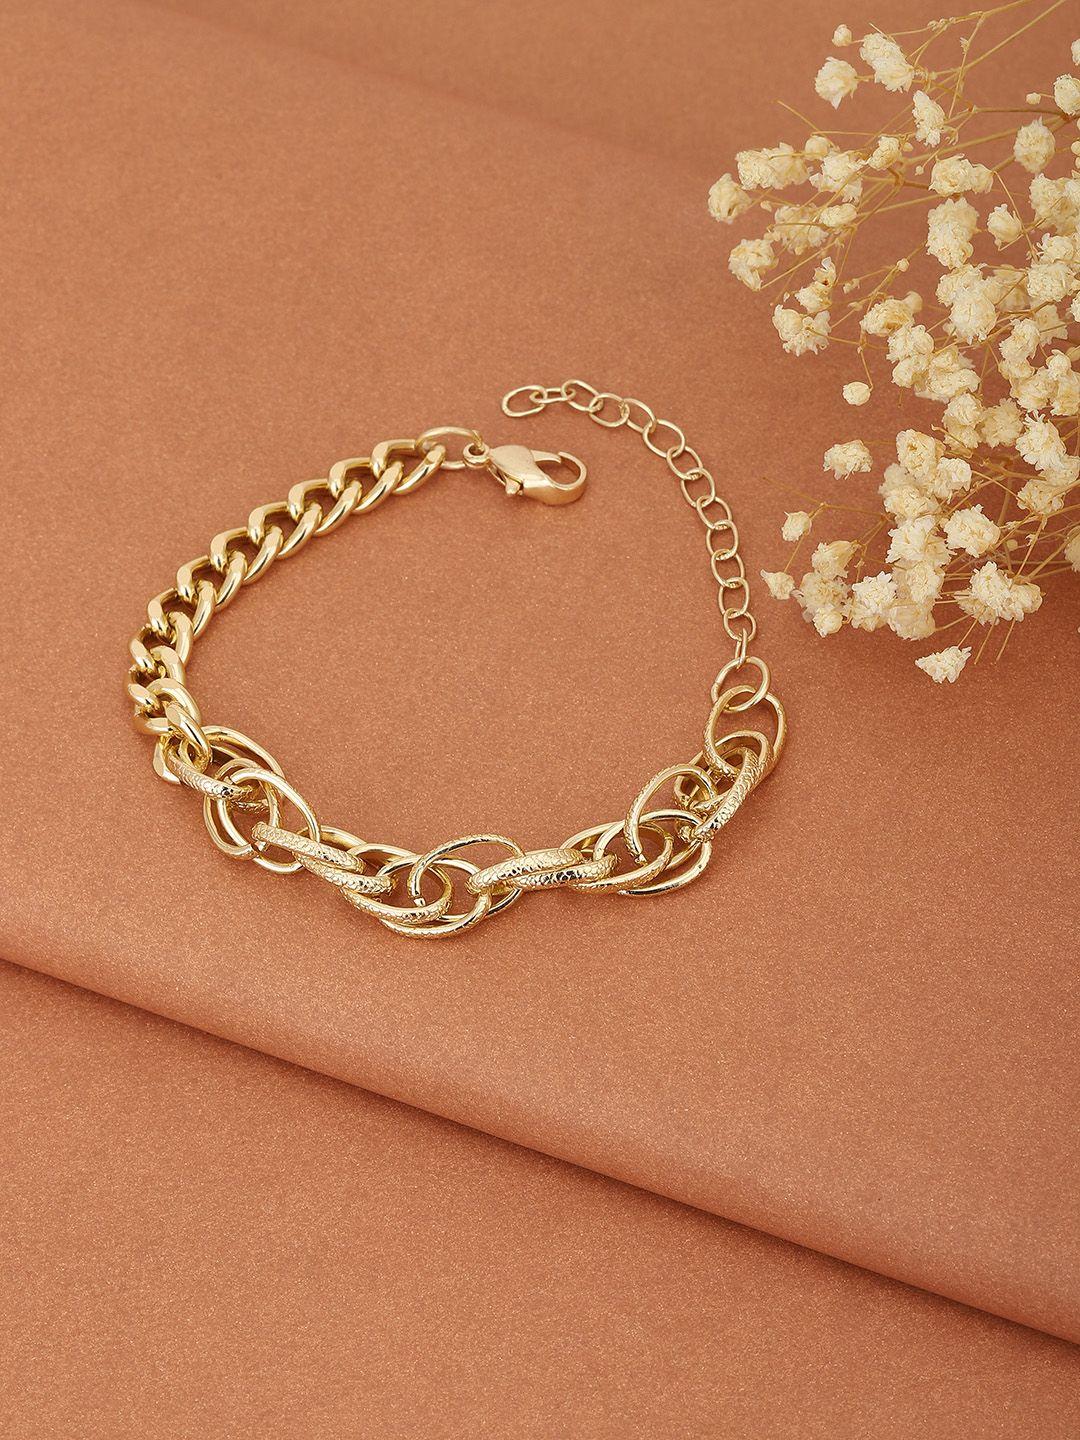 carlton-london-women-gold-plated-handcrafted-link-bracelet